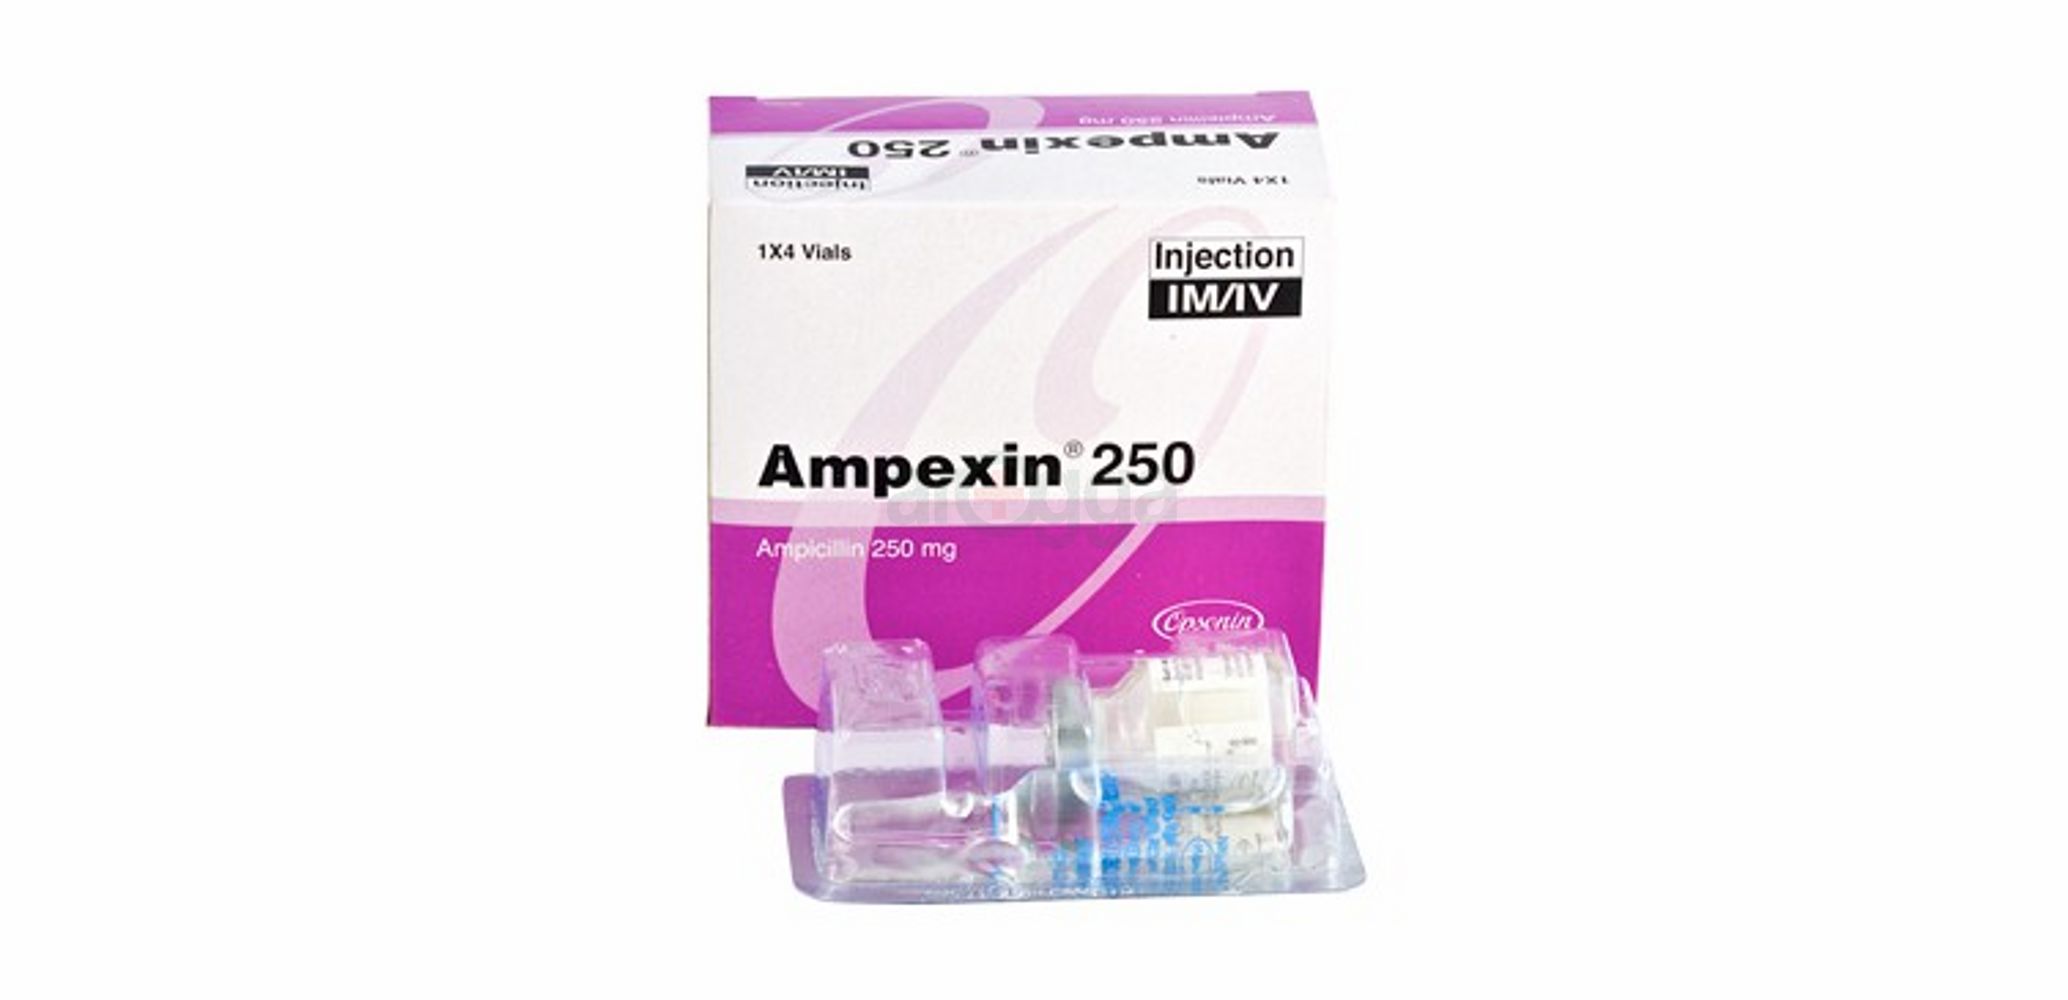 Ampexin IV/IM